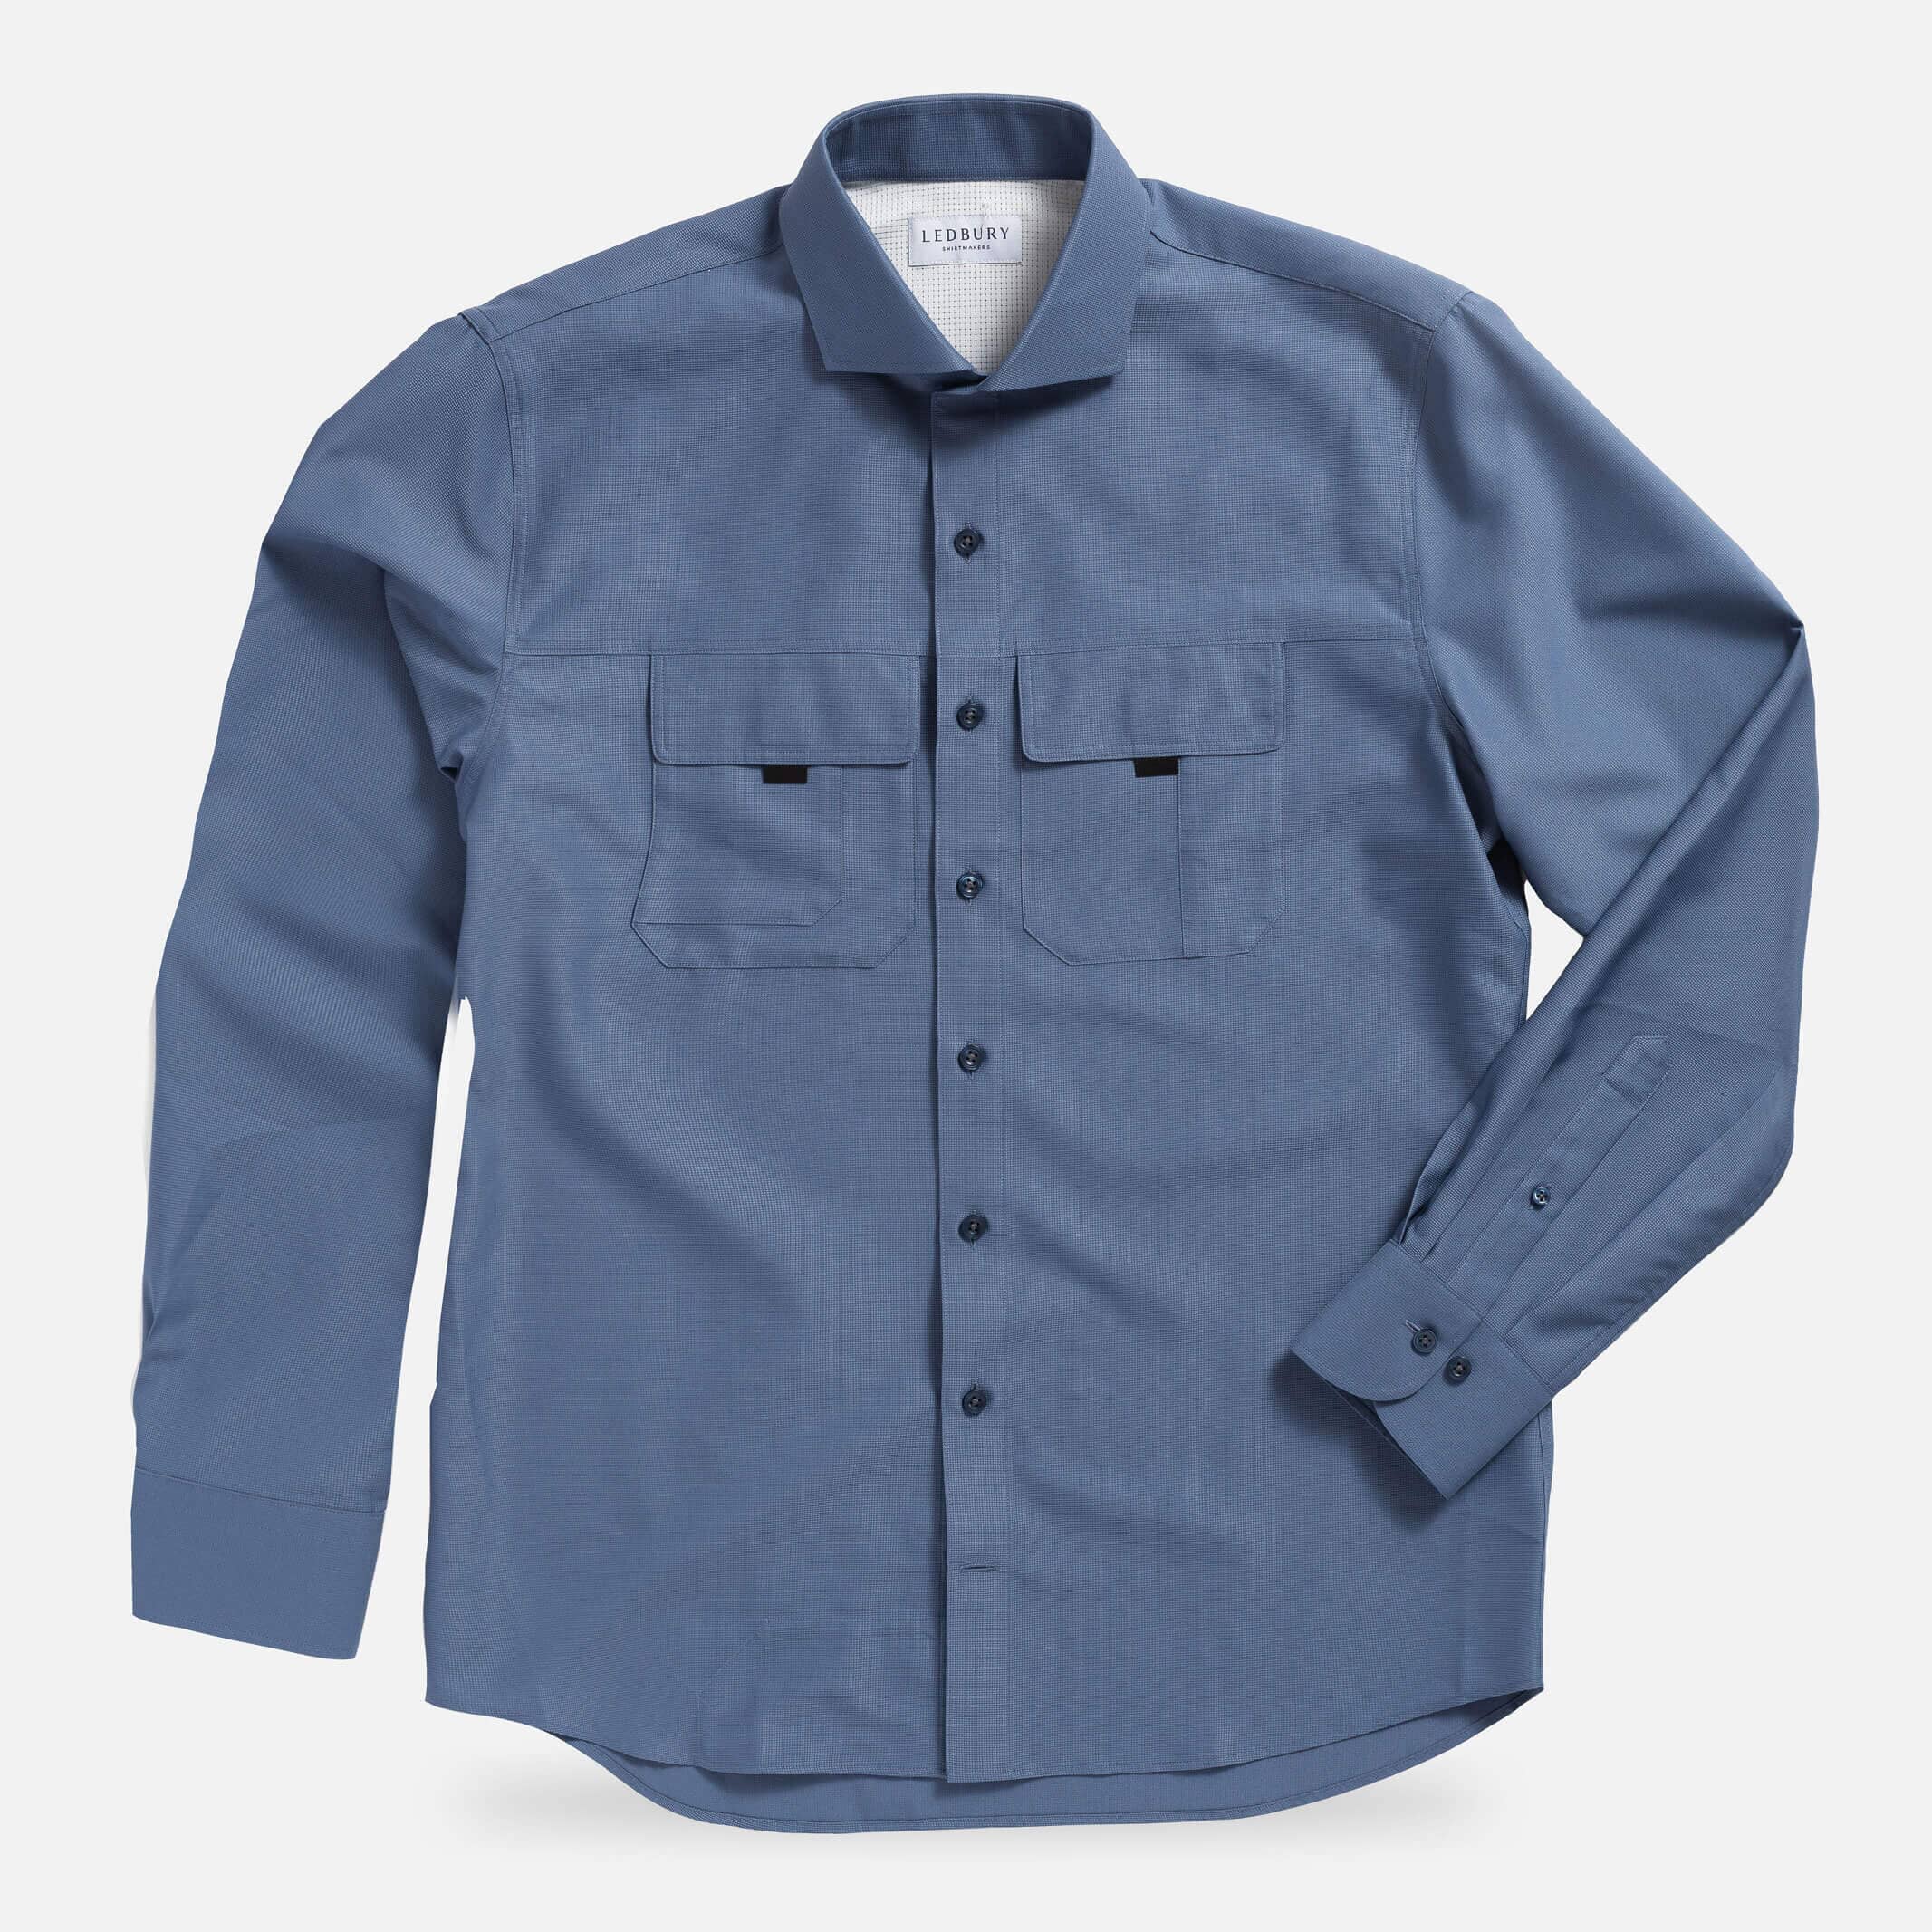 The Blue Tulu Custom Fishing Shirt